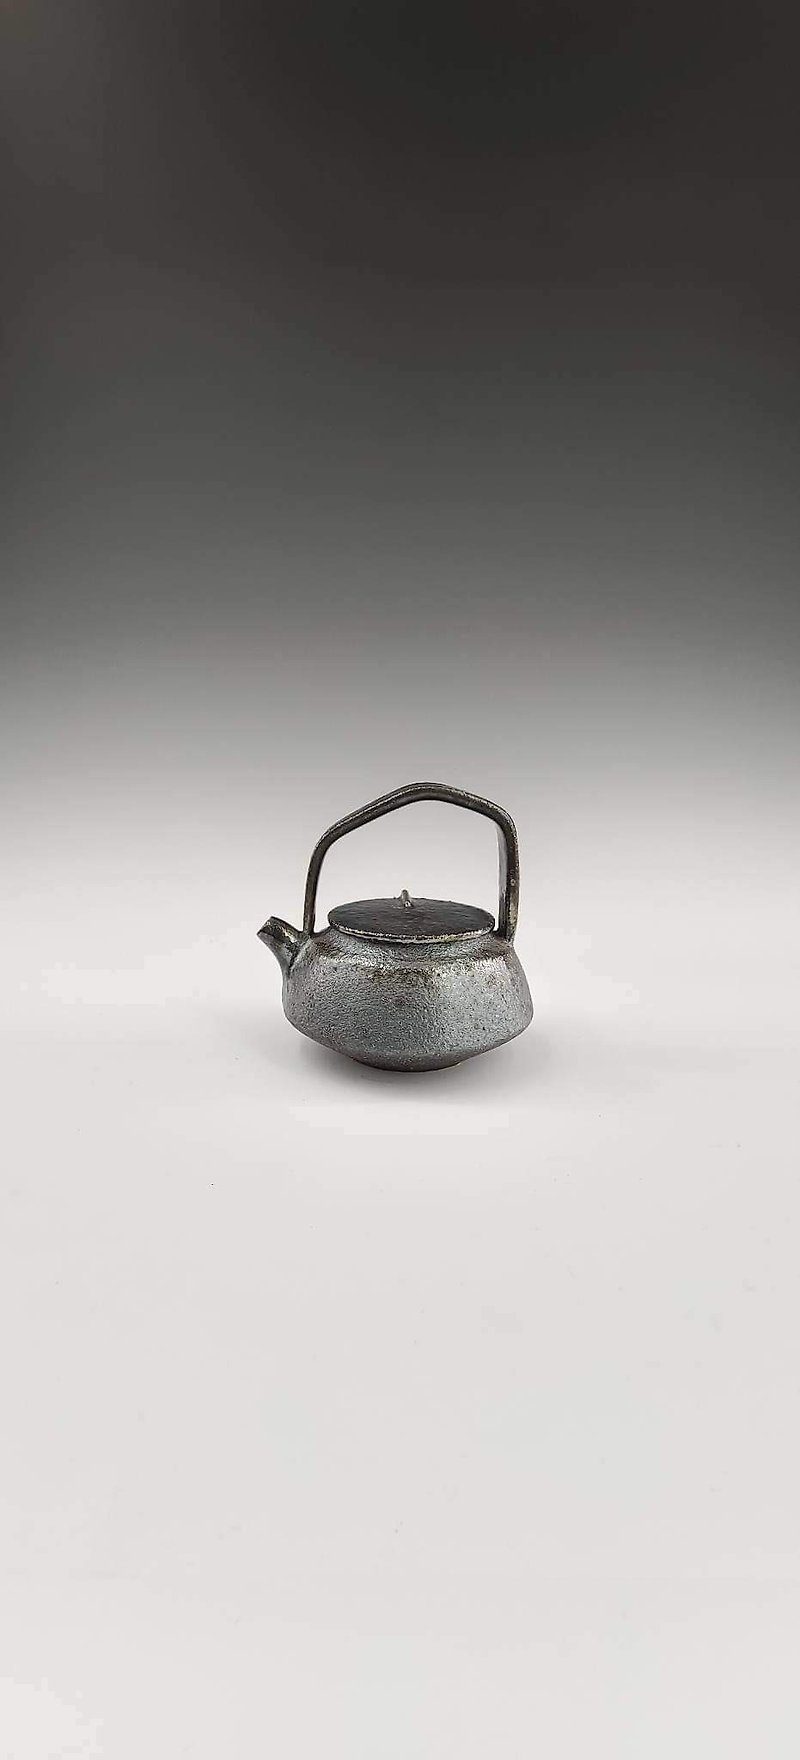 Firewood fired iron glaze teapot - Teapots & Teacups - Pottery 